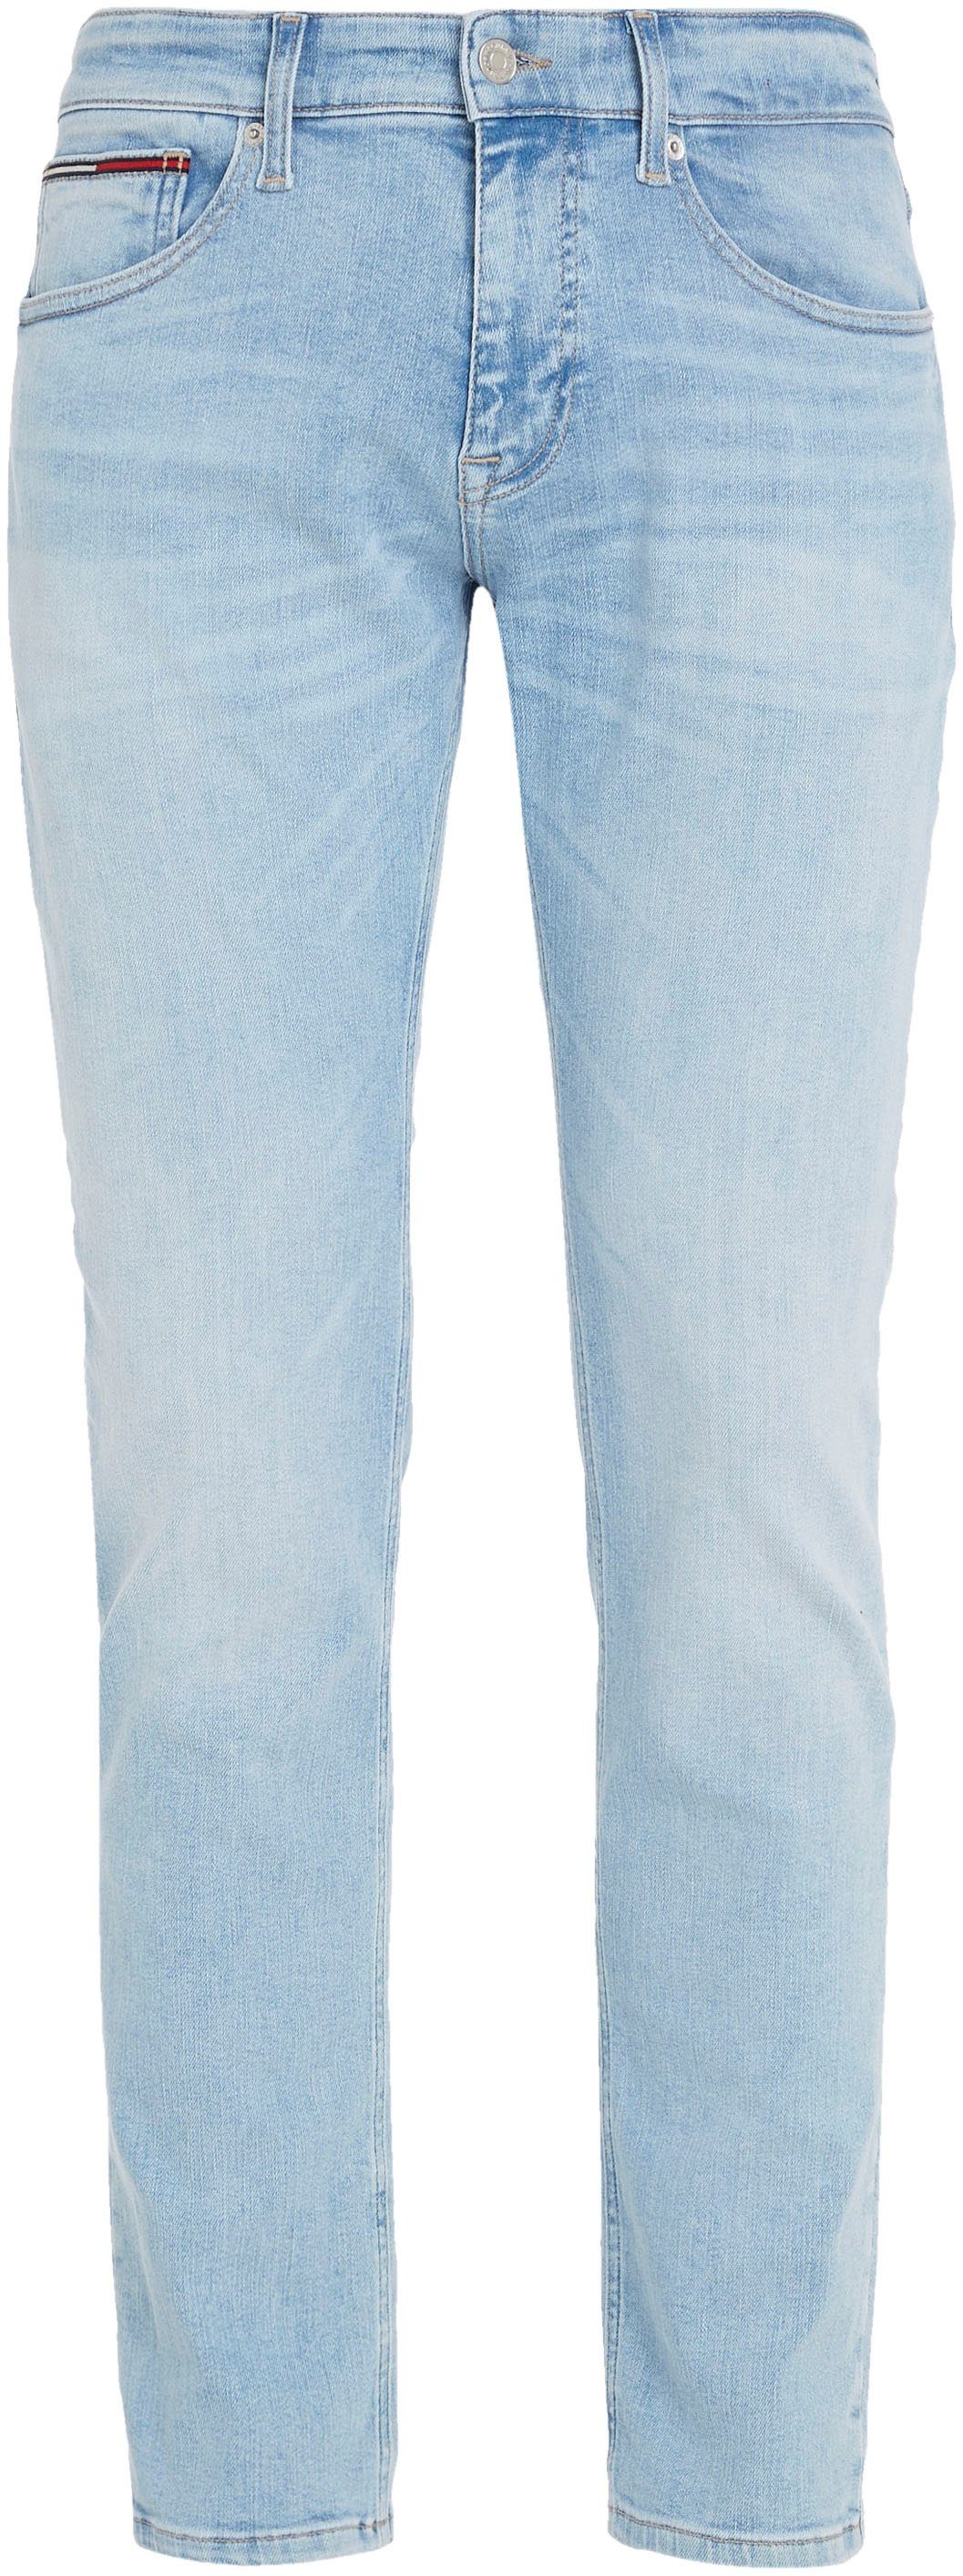 Jeans Slim-fit-Jeans Tommy d.light SCANTON